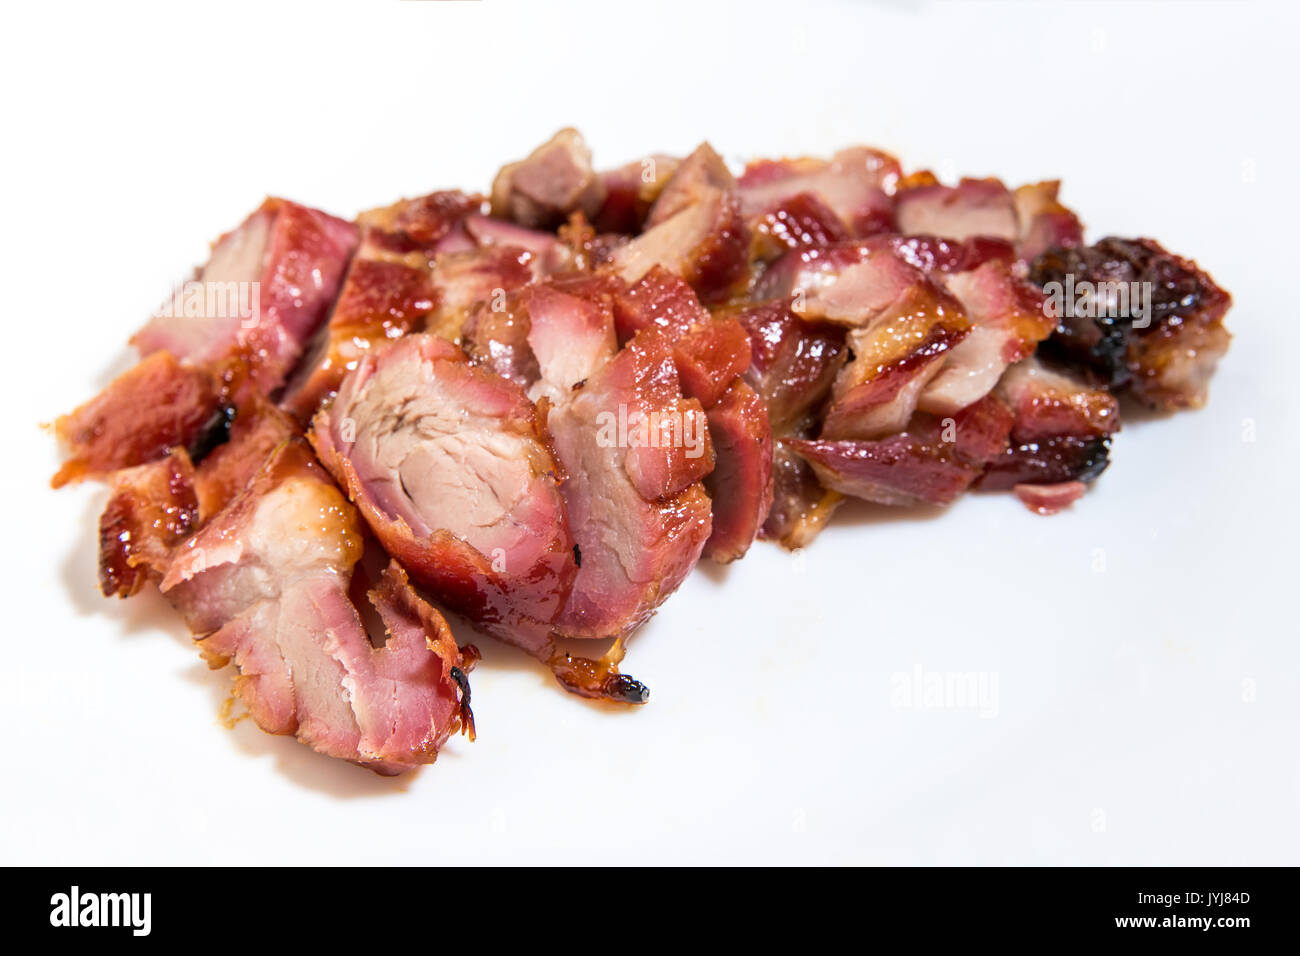 Cantonese barbecued pork - Char siu Stock Photo